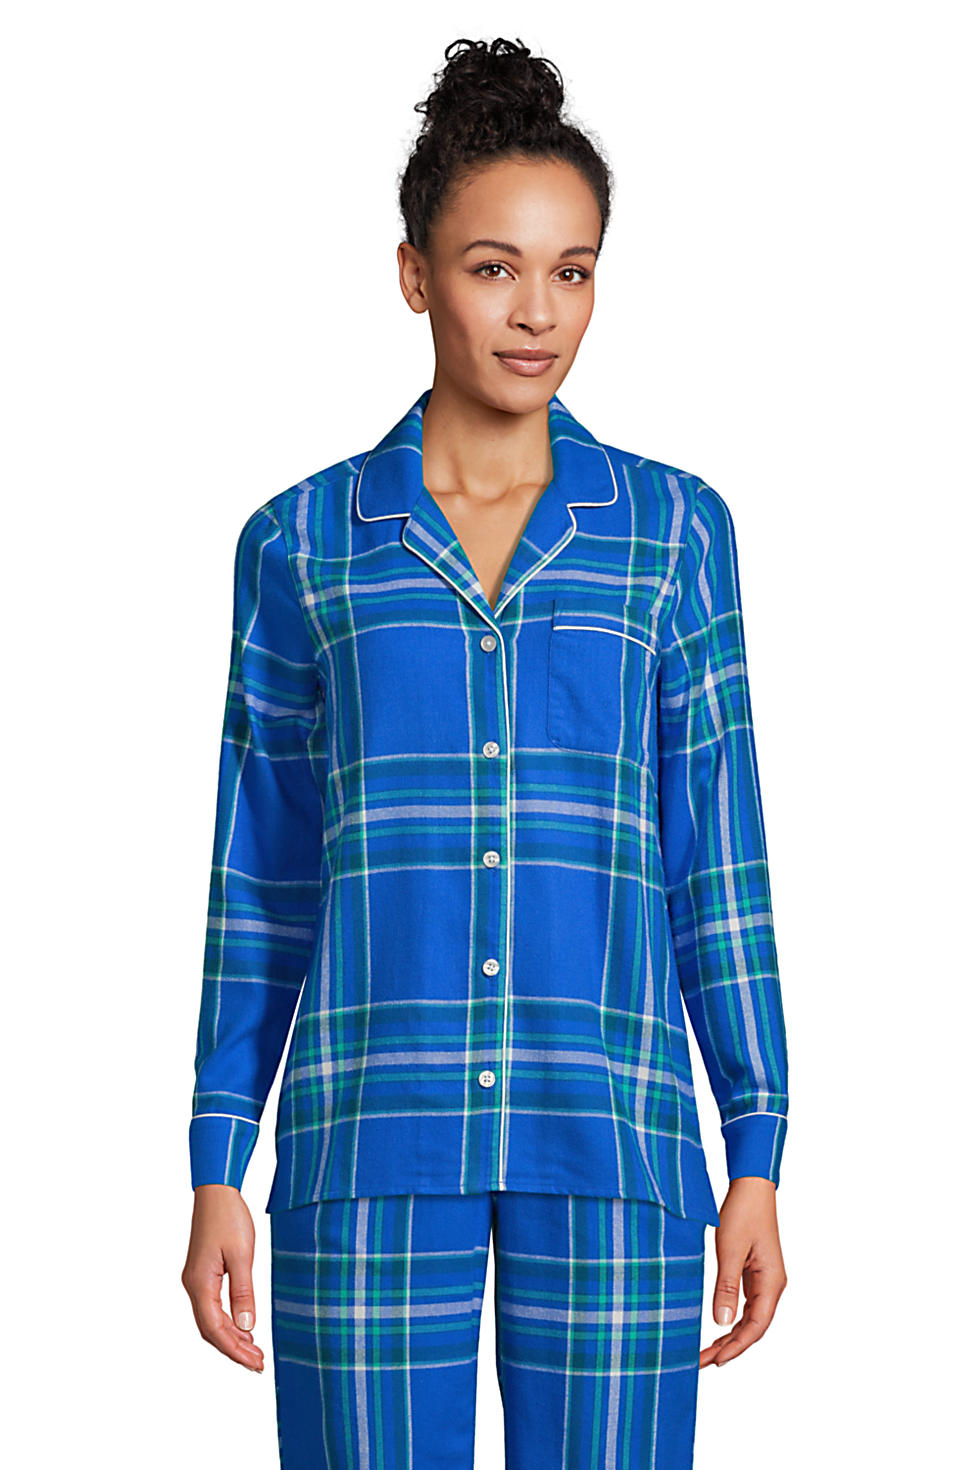 Lands End Women's Long Sleeve Print Flannel Pajama Top (Royal Cobalt Artisan Plaid)